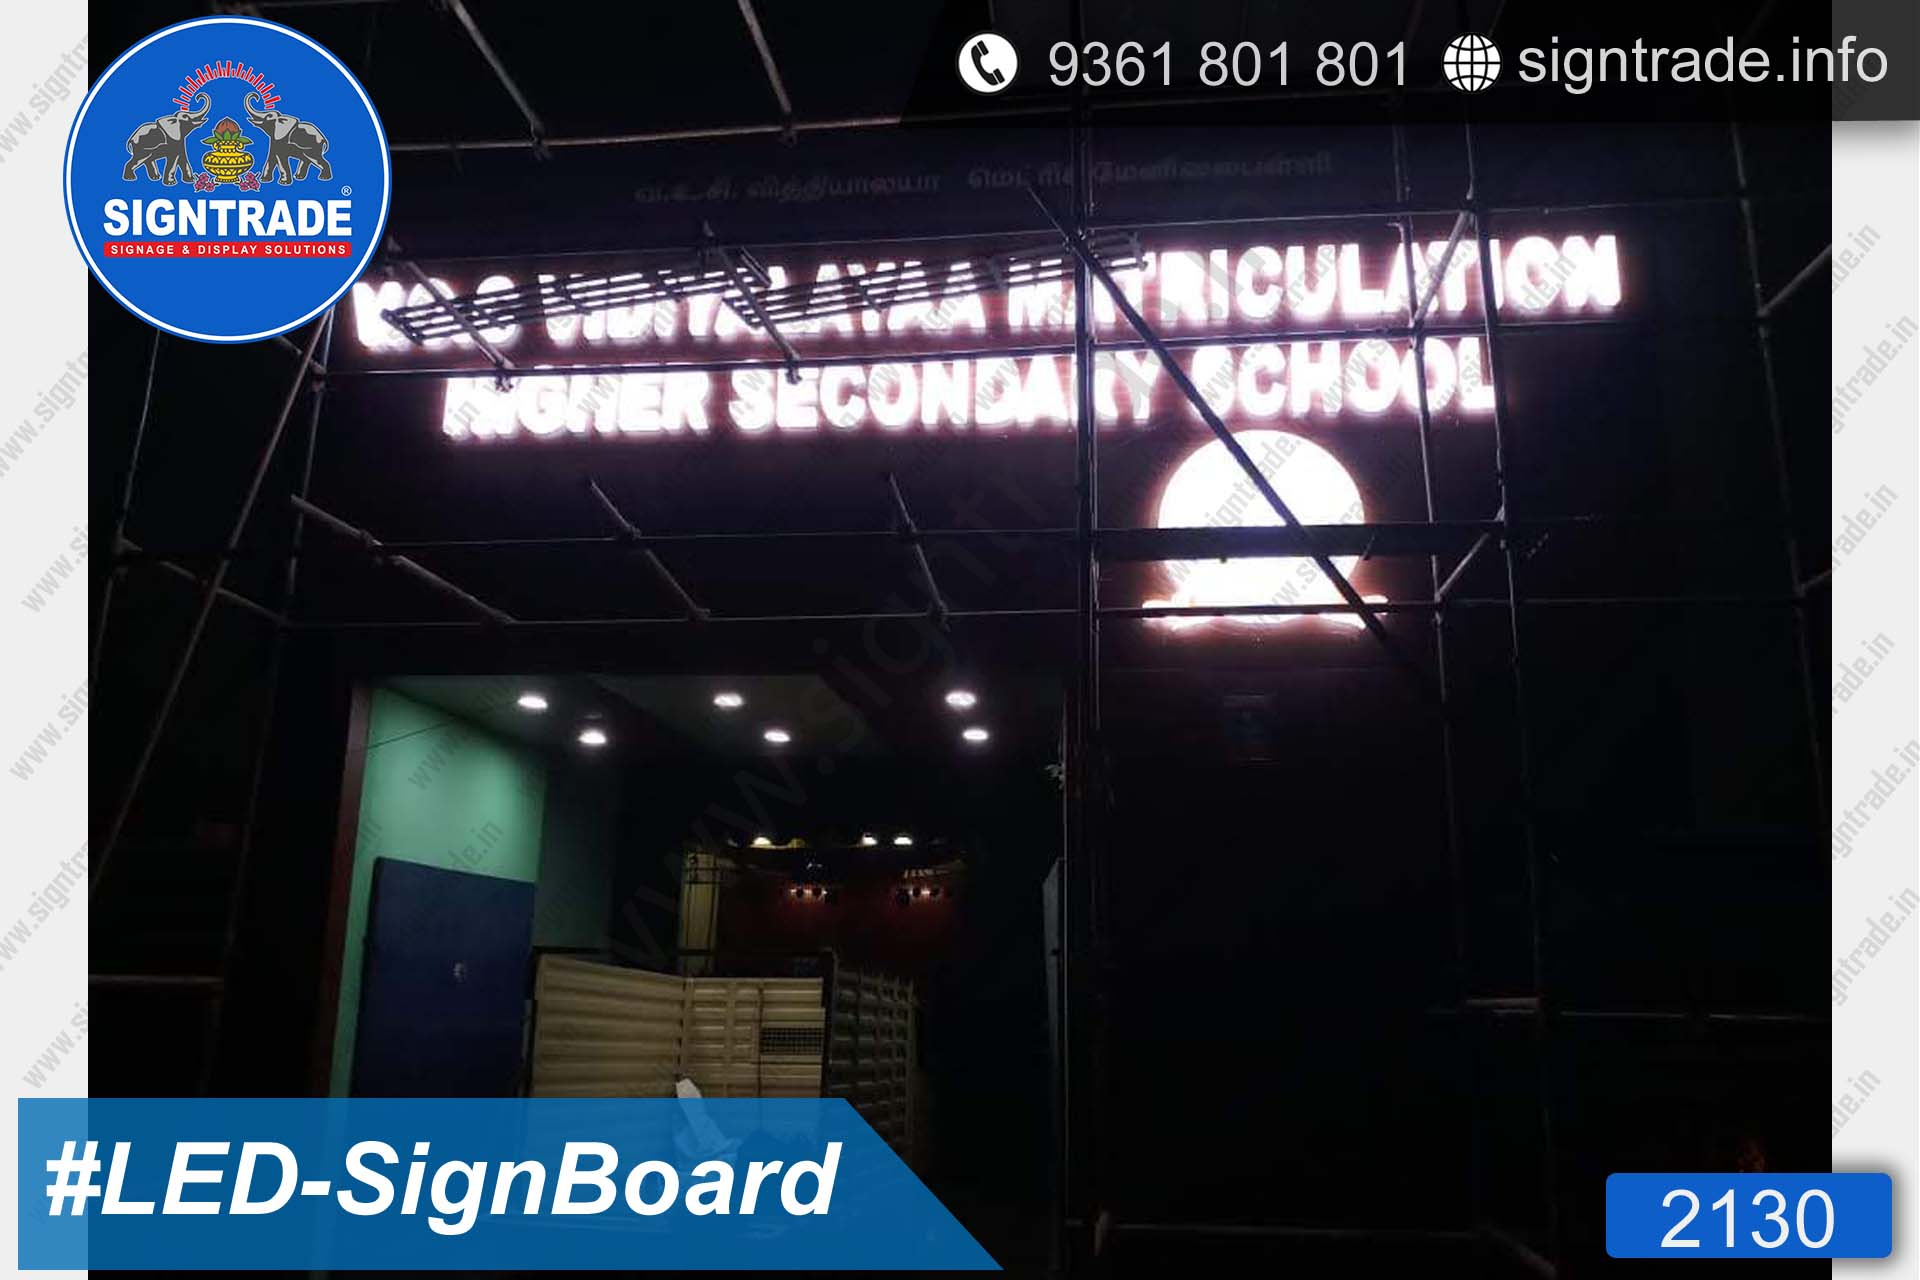 VOC Vidyalayaa Matriculation Higher Secondary School LED sign Board